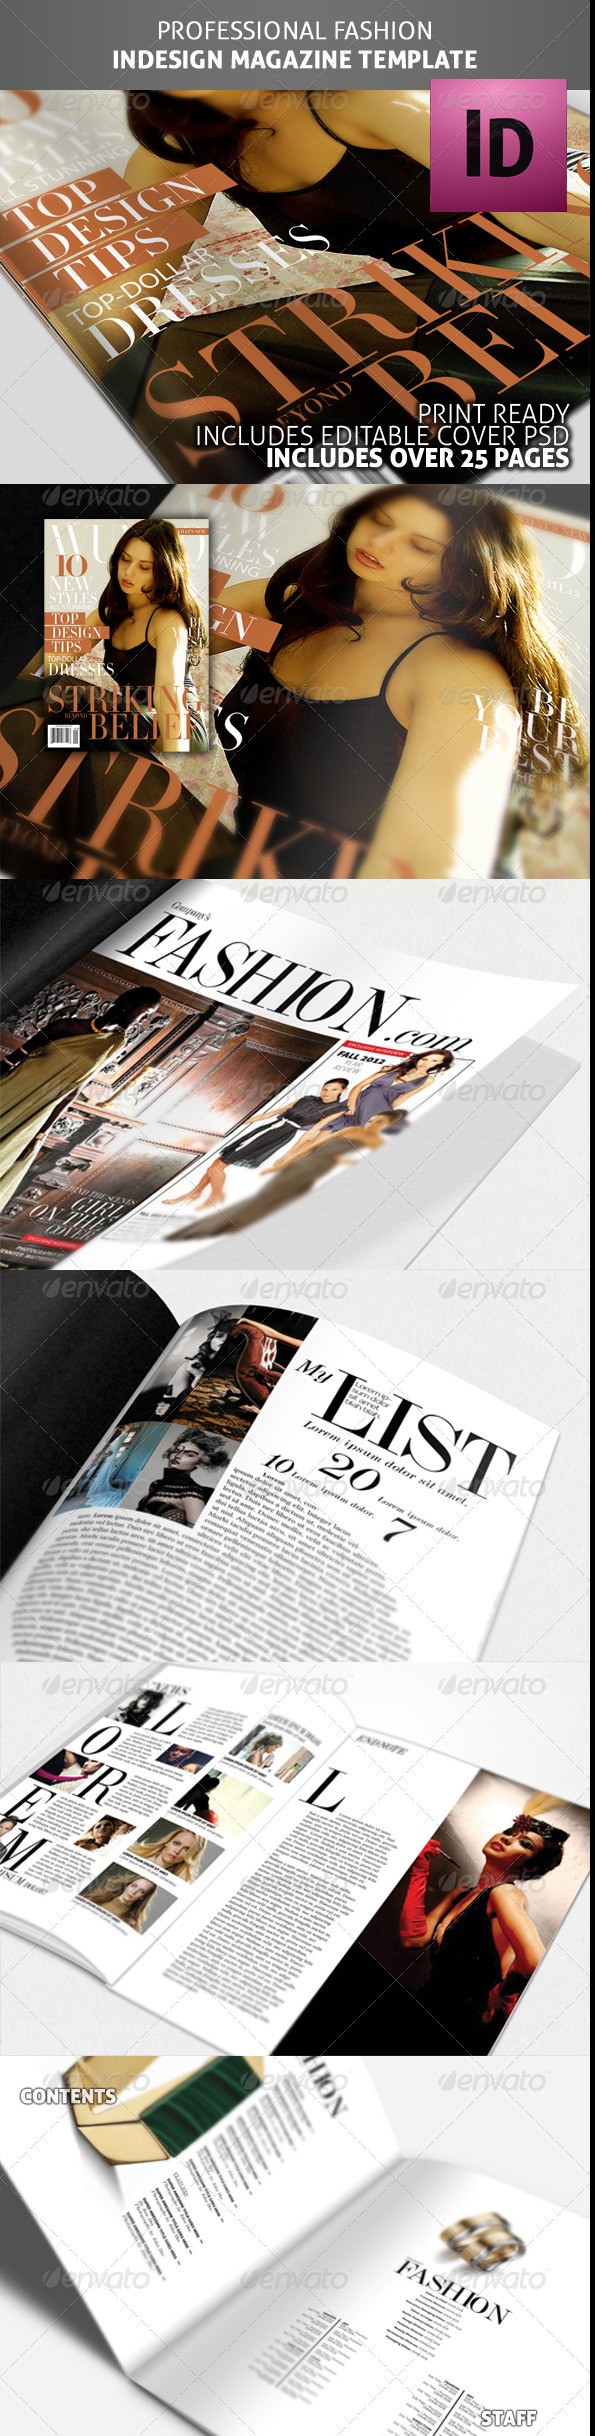 Pro InDesign Fashion Magazine Template